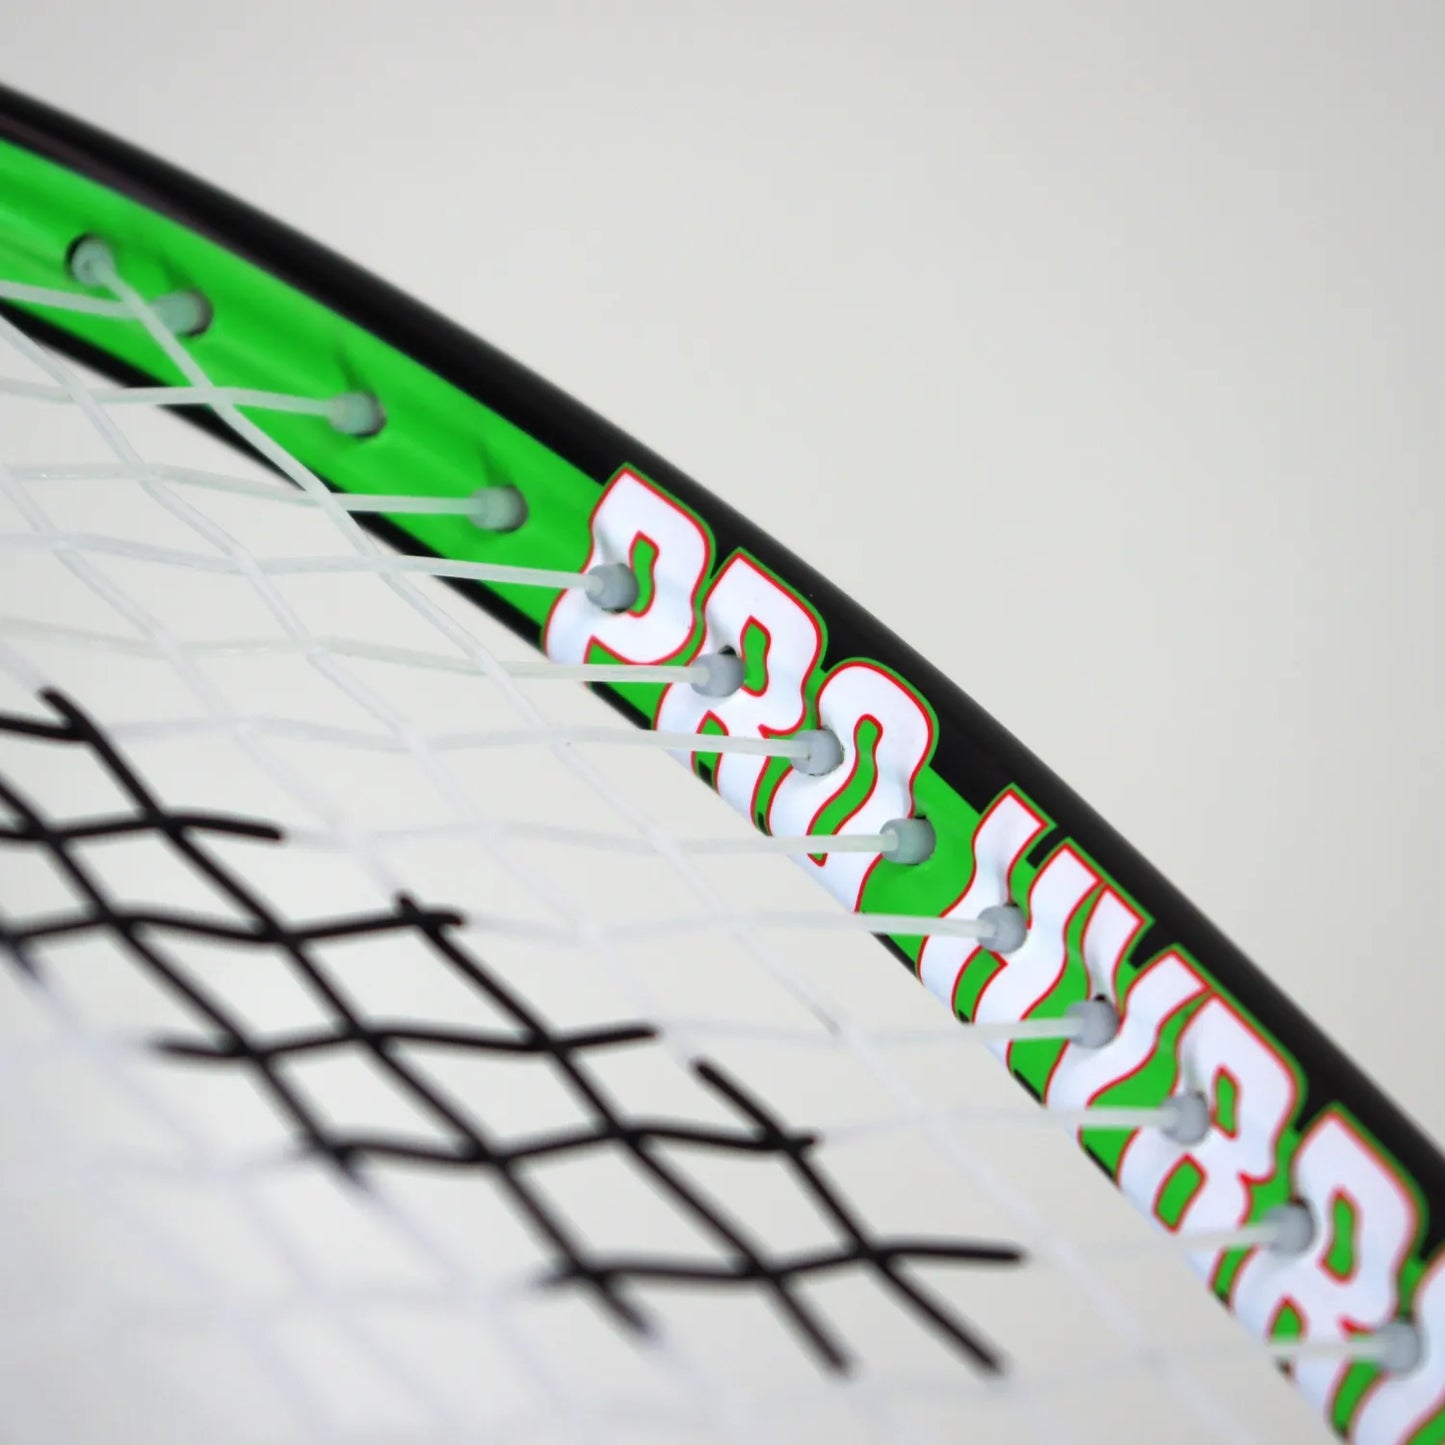 Karakal Pro Hybrid Squash Racket